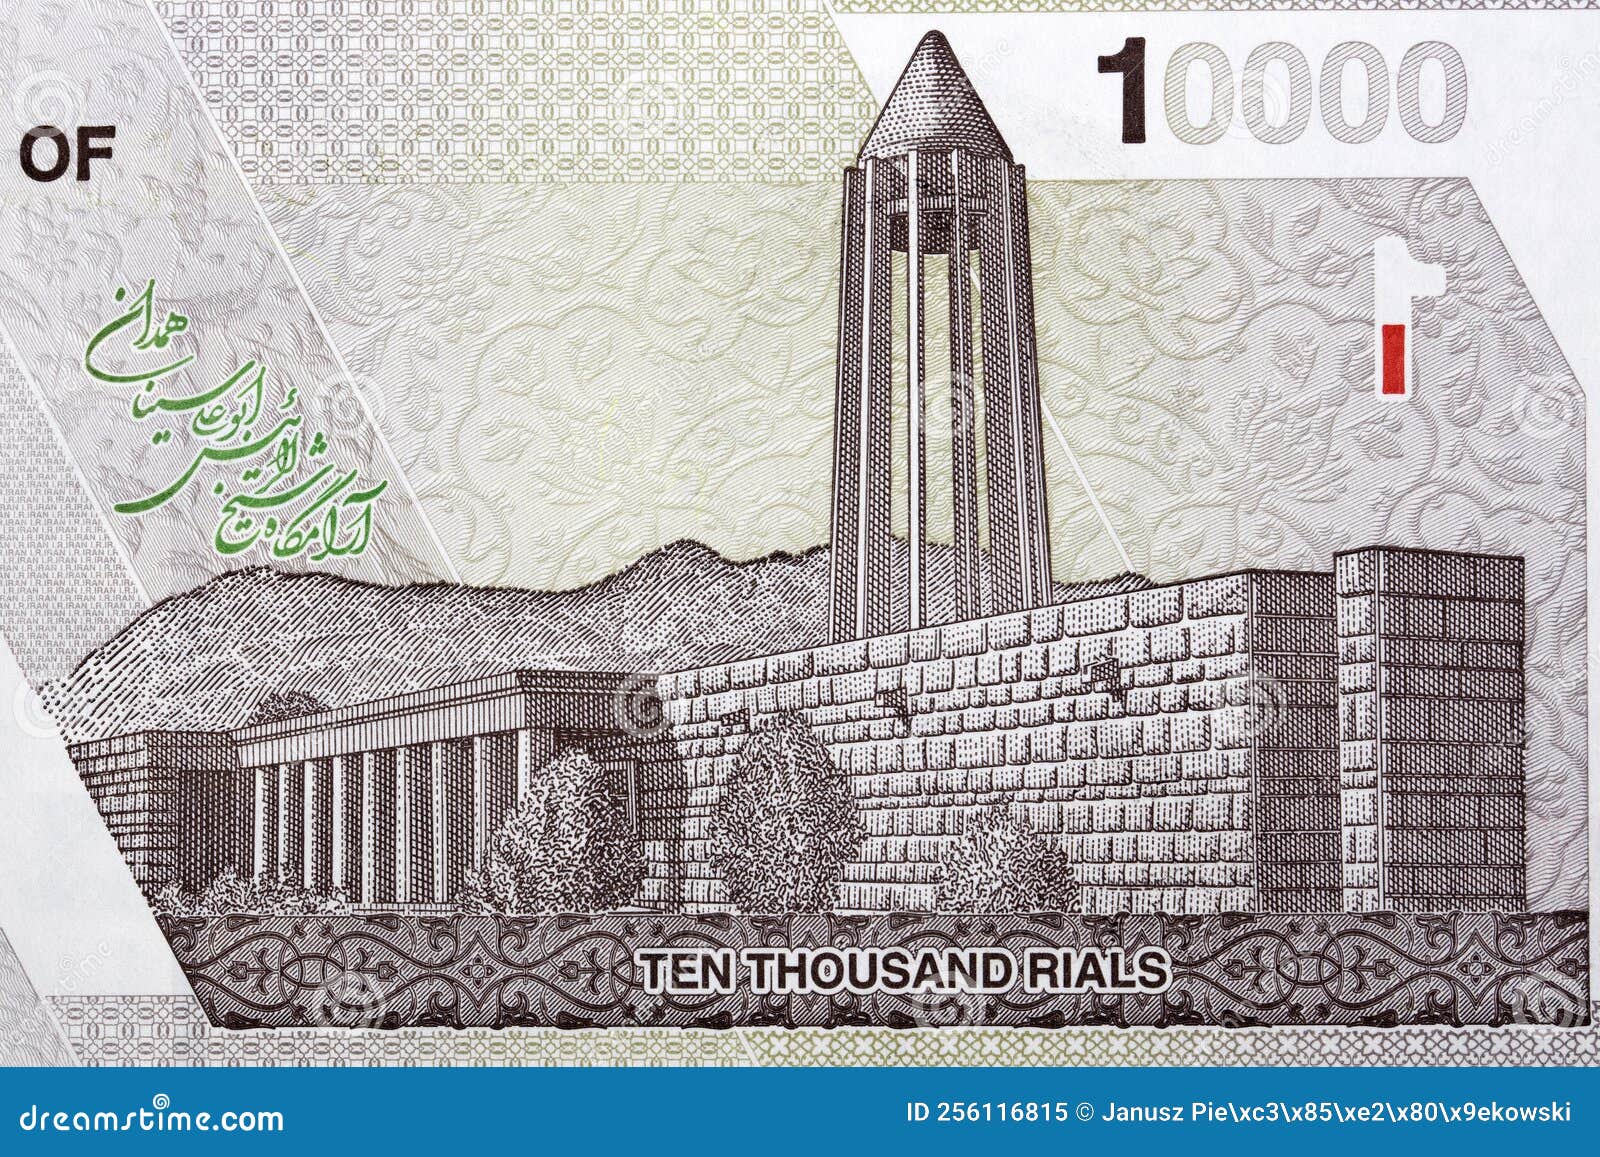 avicenna mausoleum in hamadan from iranian money